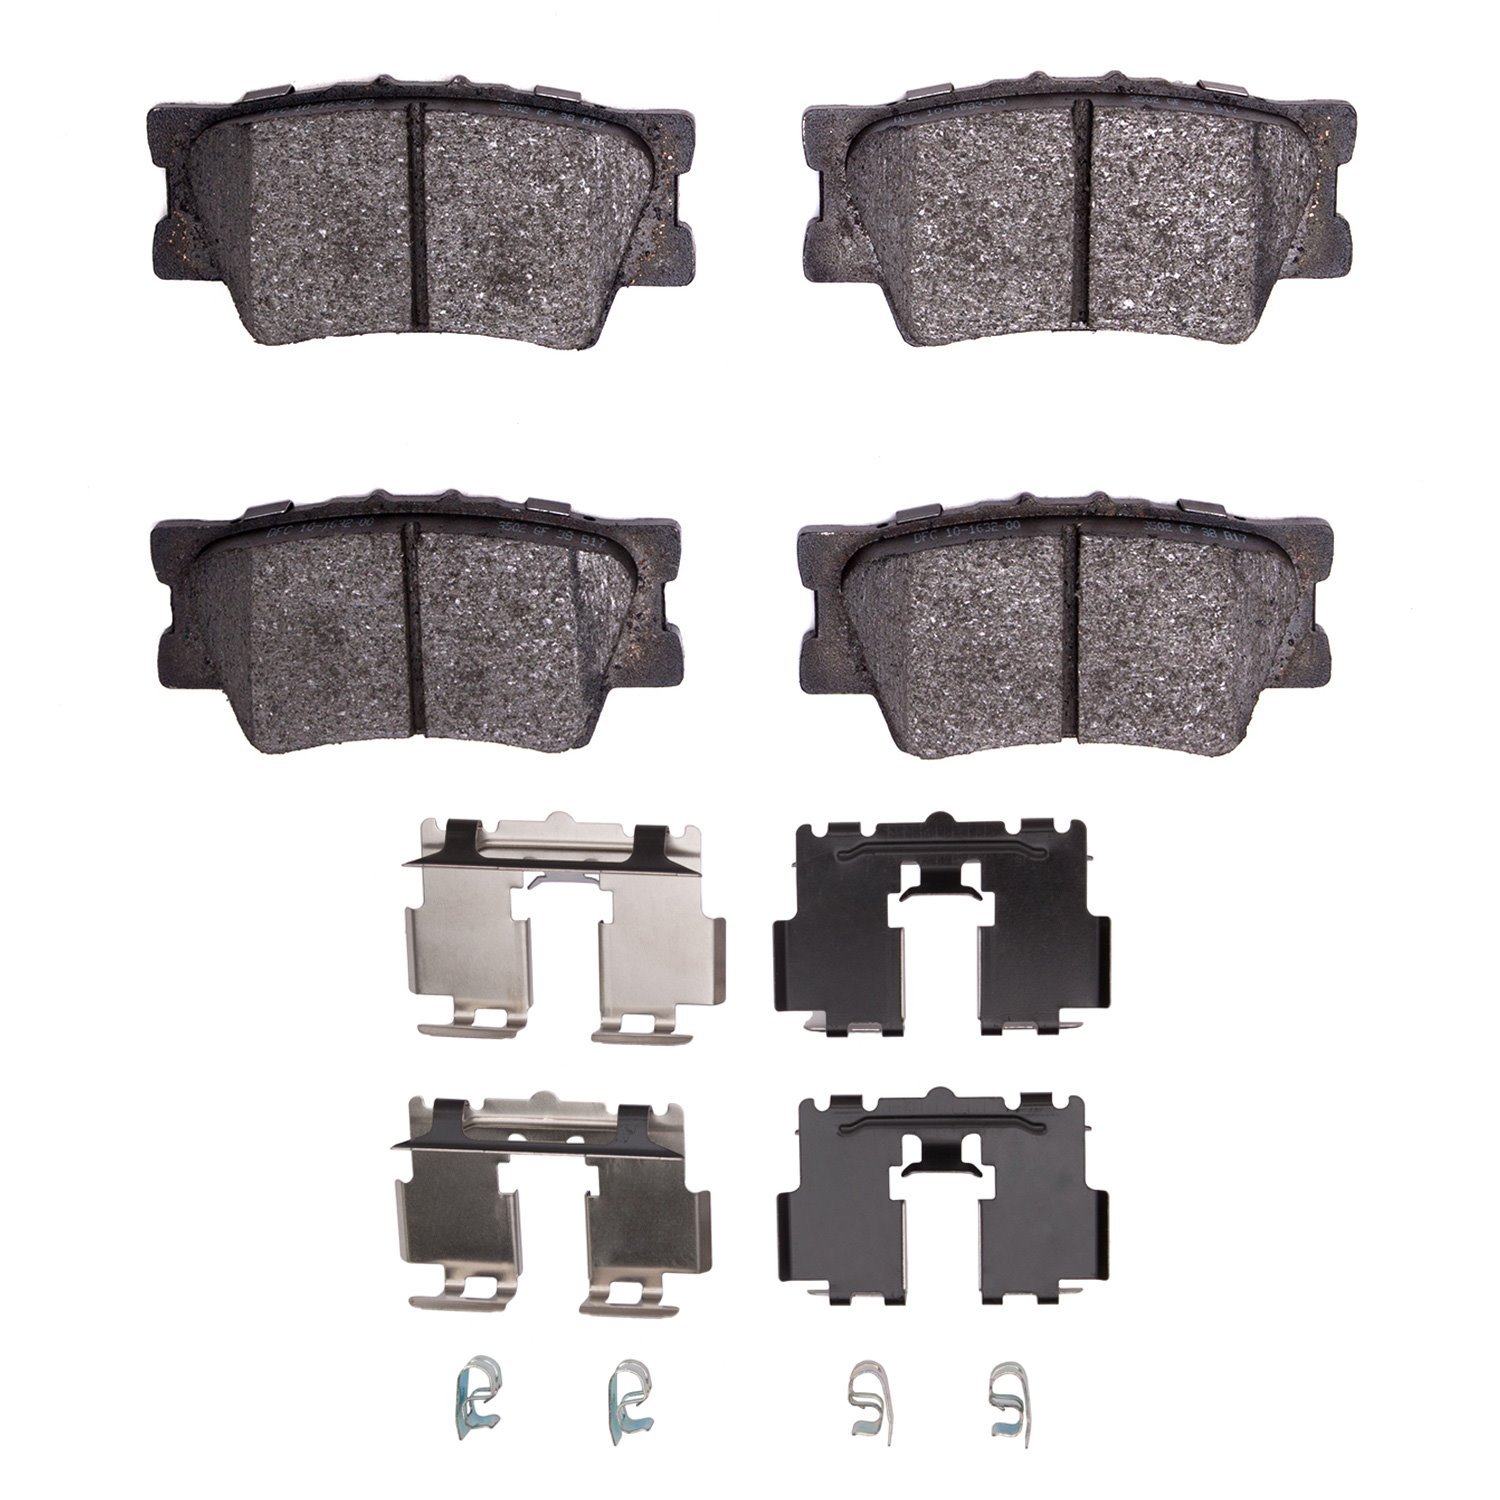 1311-1632-02 3000-Series Semi-Metallic Brake Pads & Hardware Kit, Fits Select Multiple Makes/Models, Position: Rear